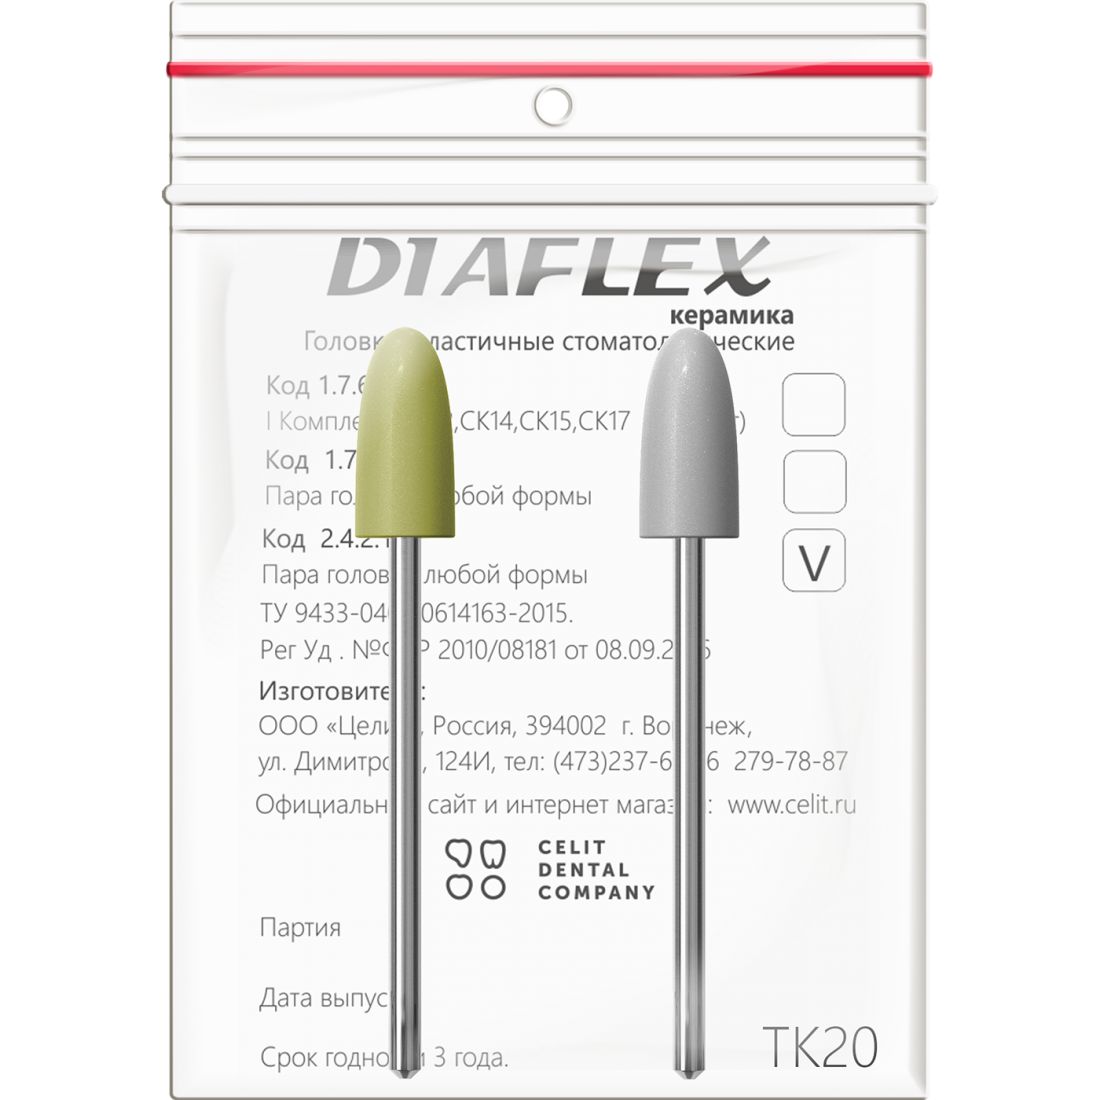 Diaflex Керамика ТК20 - головки Диафлекс для обработки керамики (2шт)